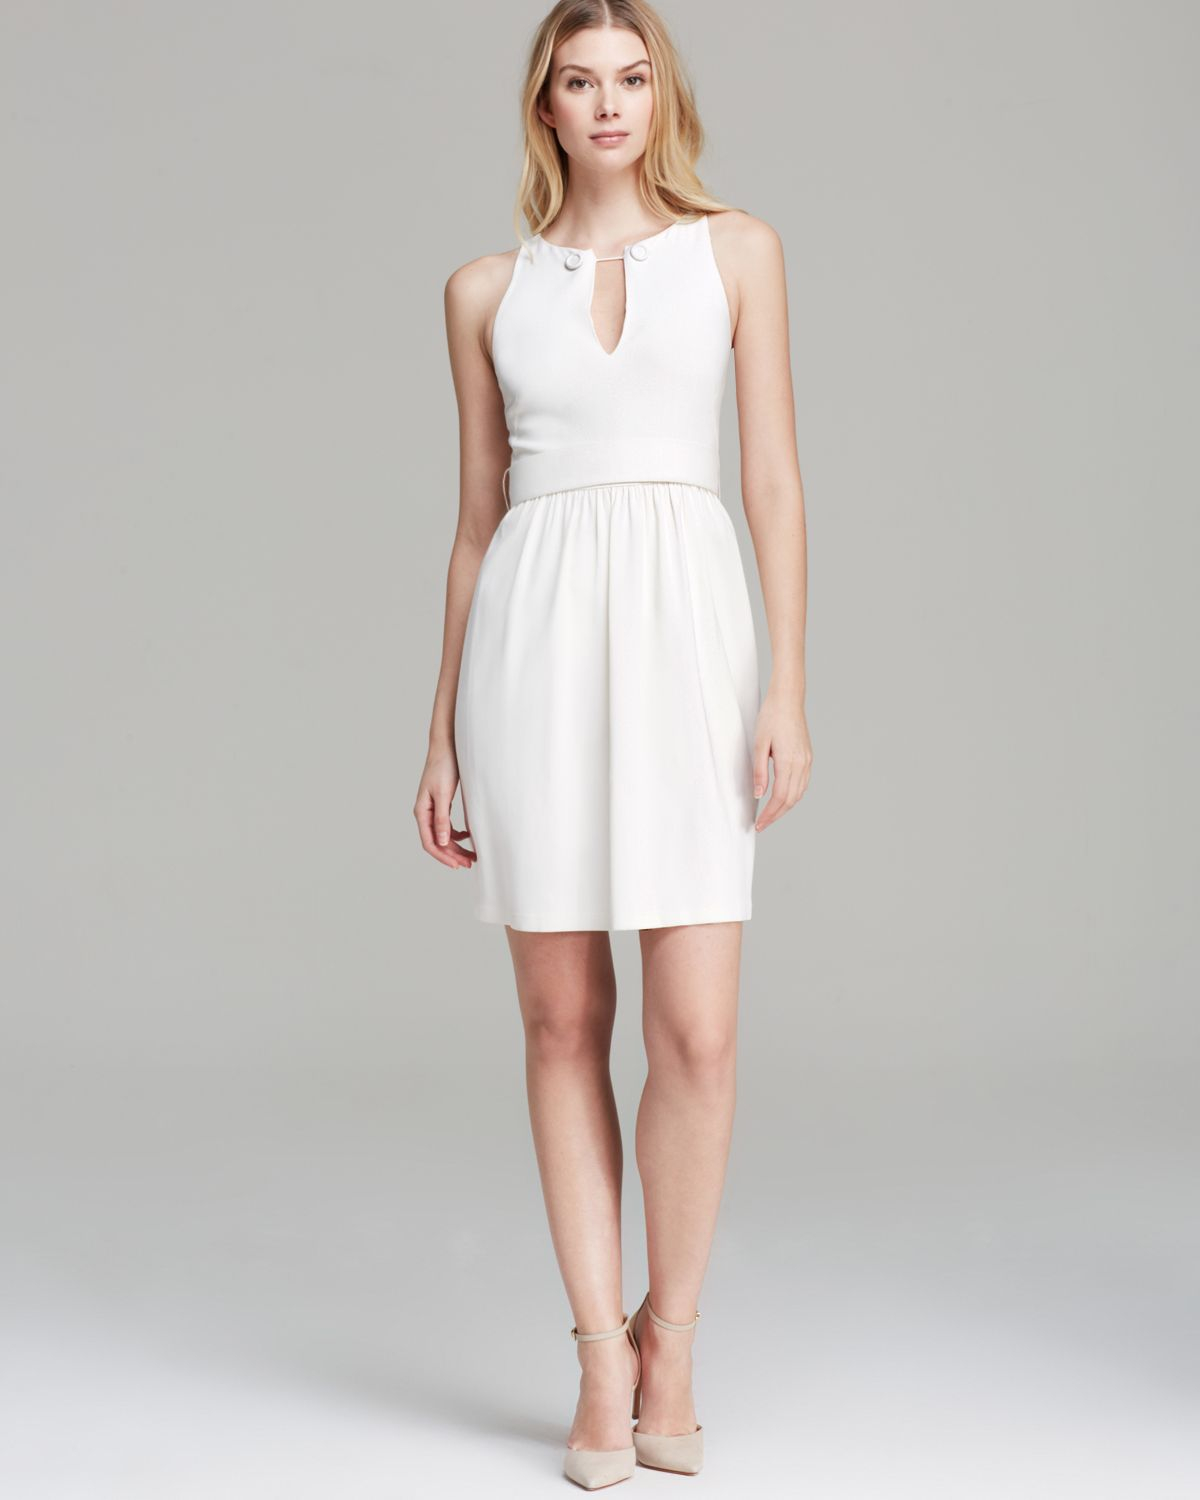 White Day Dress